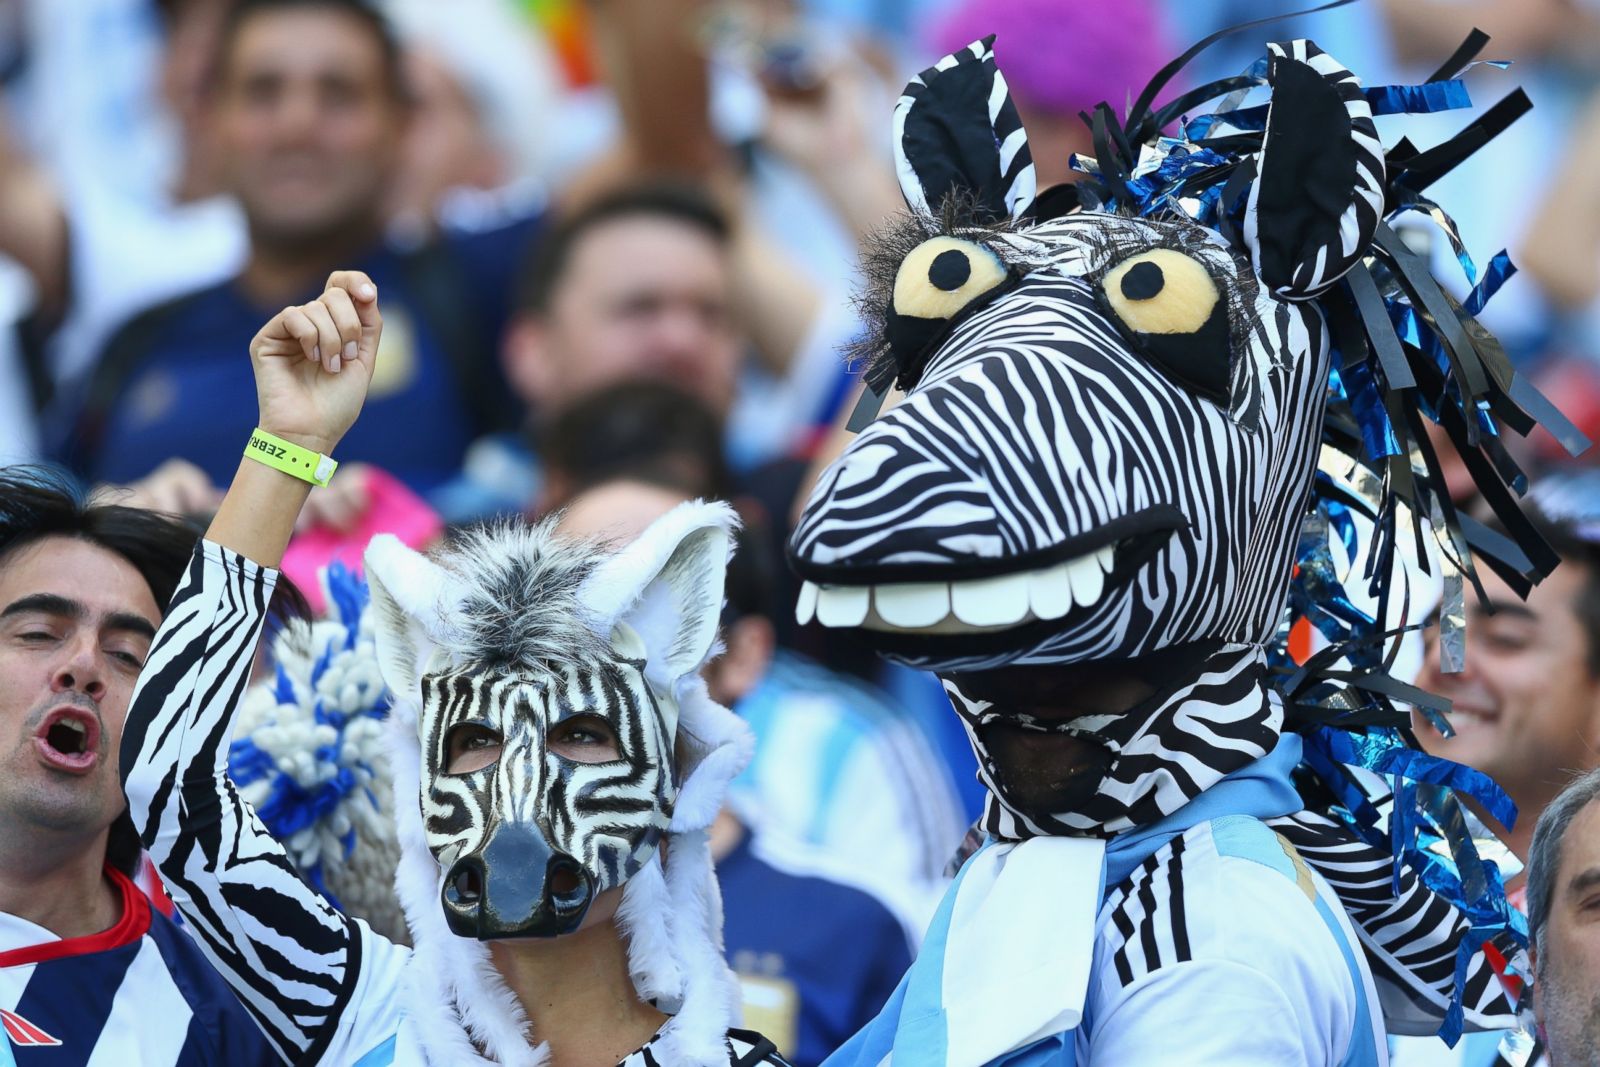 The Craziest World Cup Fans Photos - ABC News